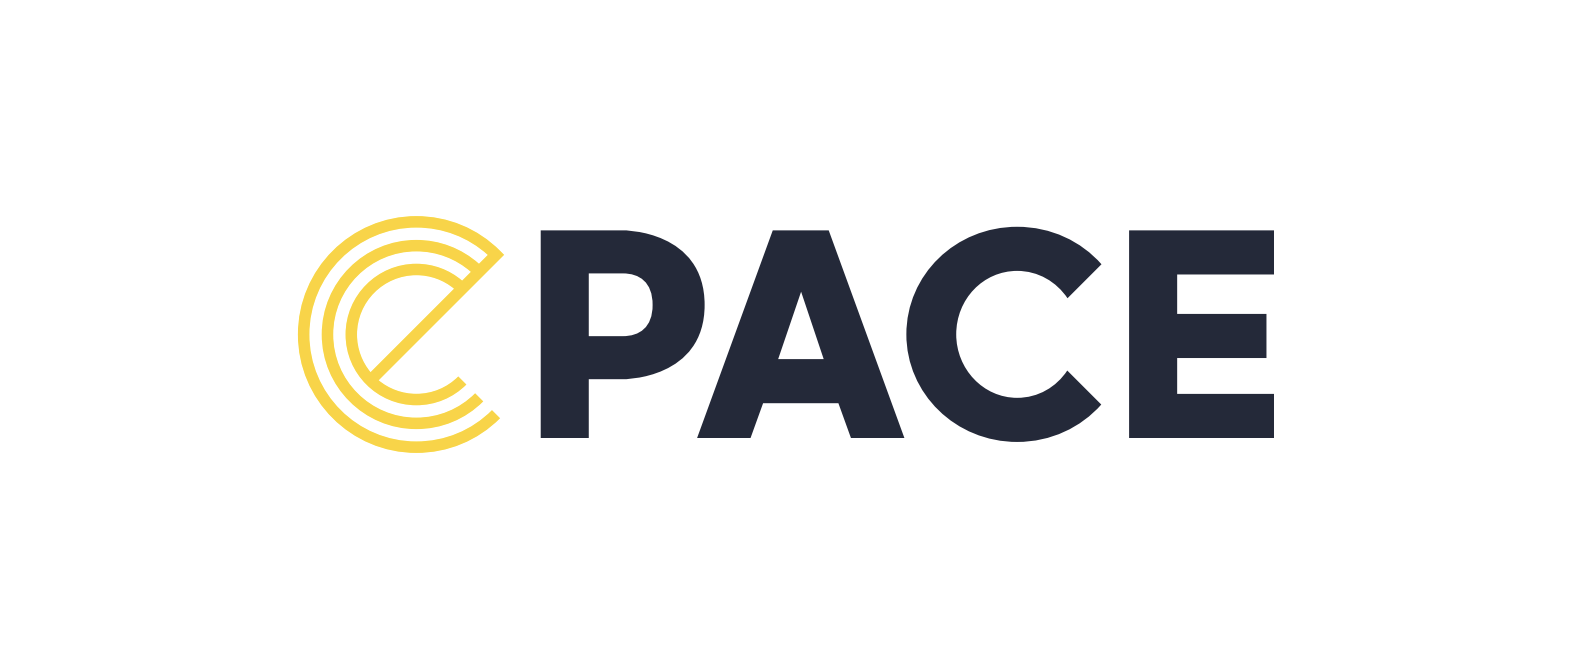 ePace logo